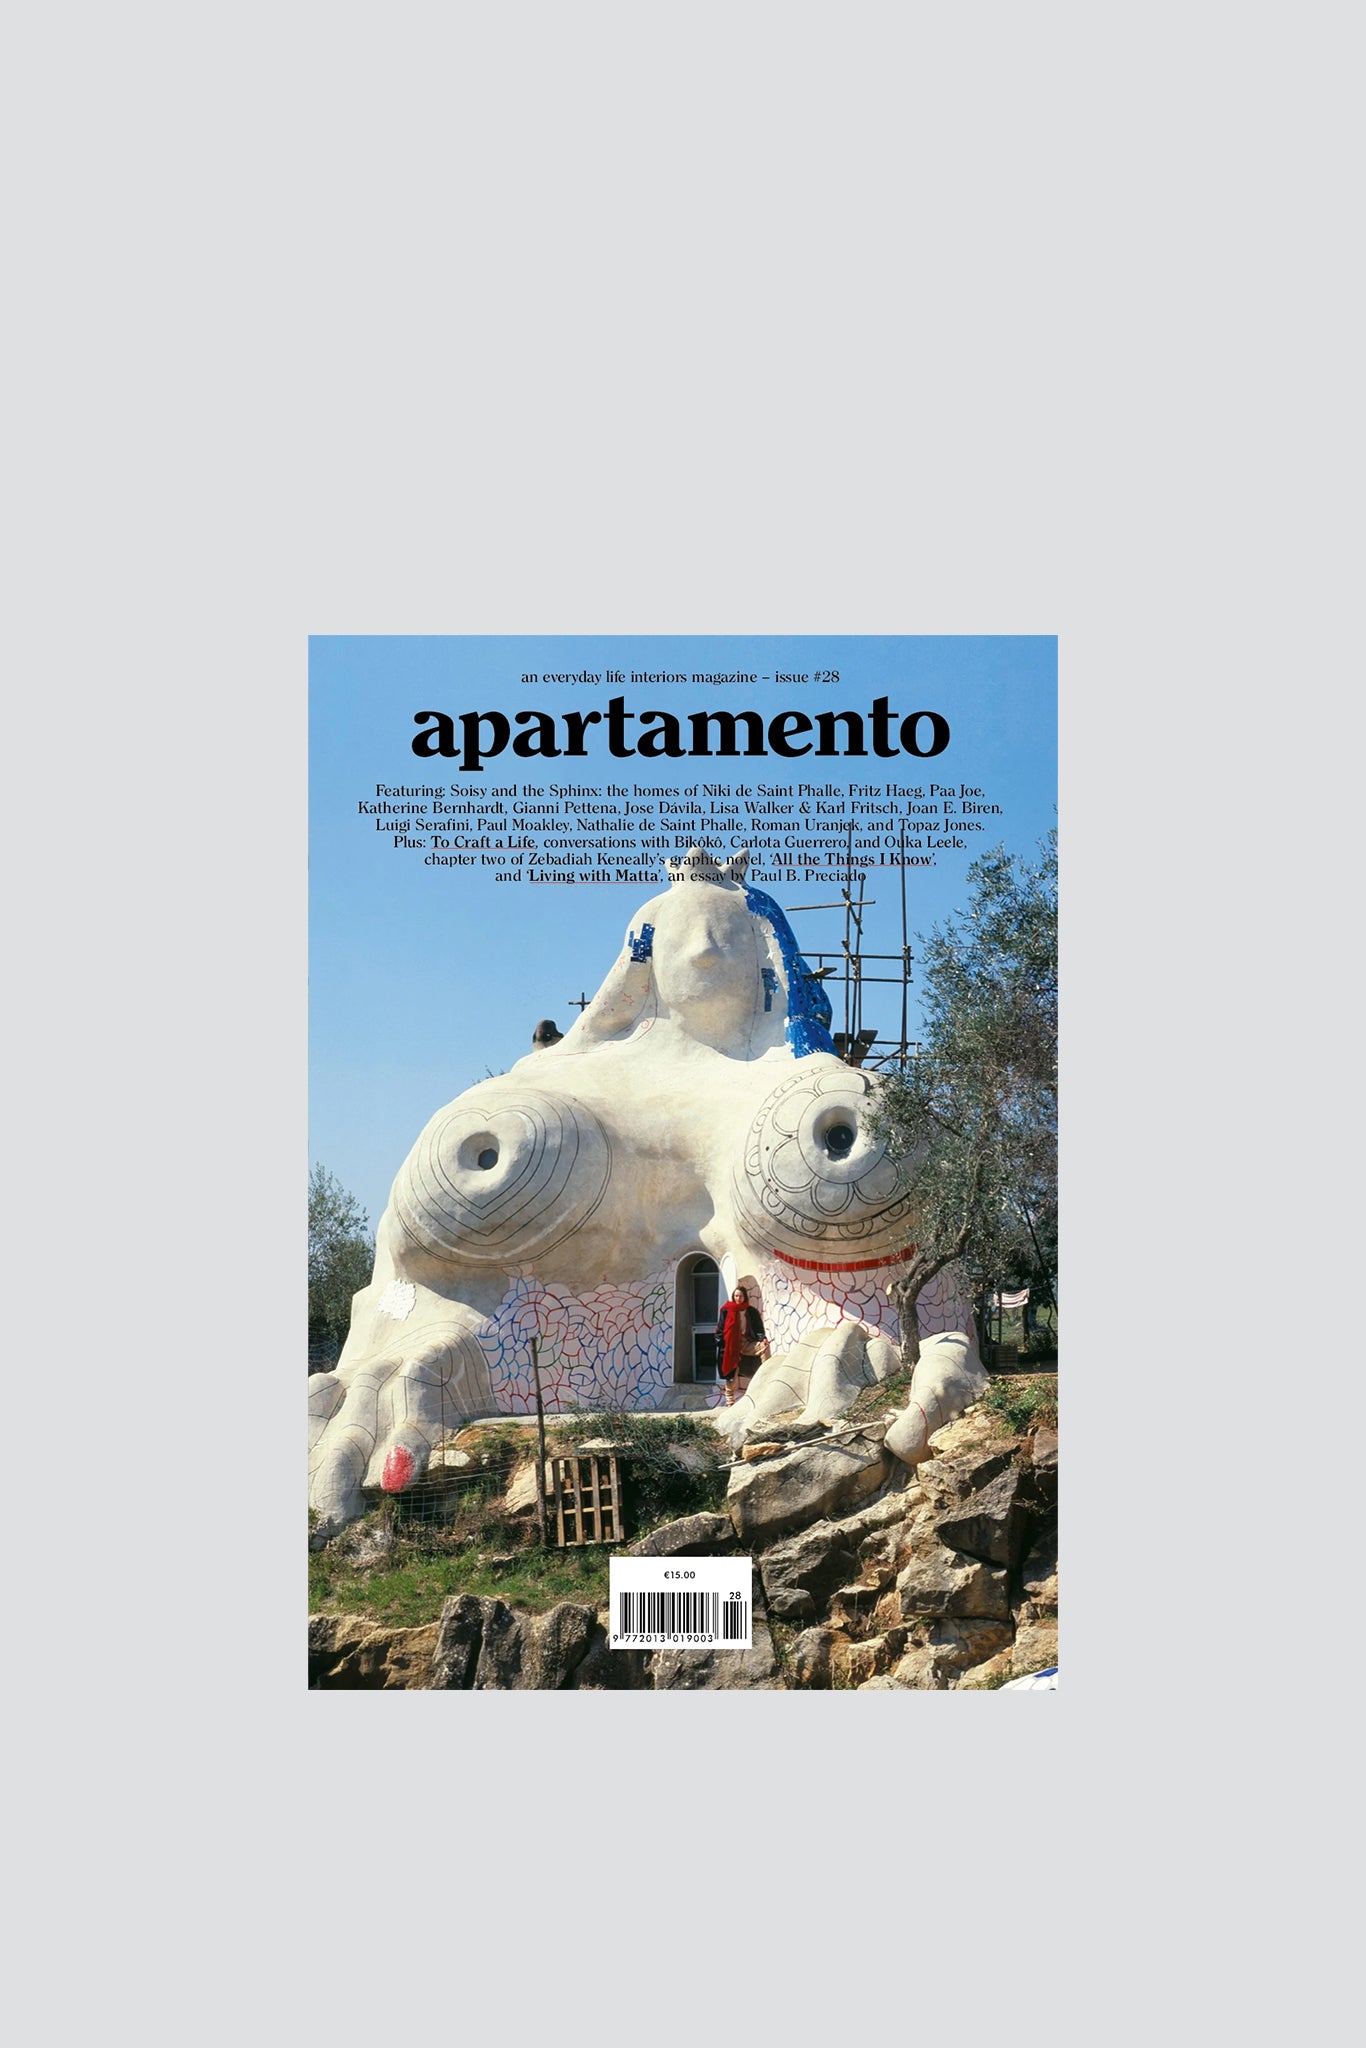 Apartamento - Issue 28